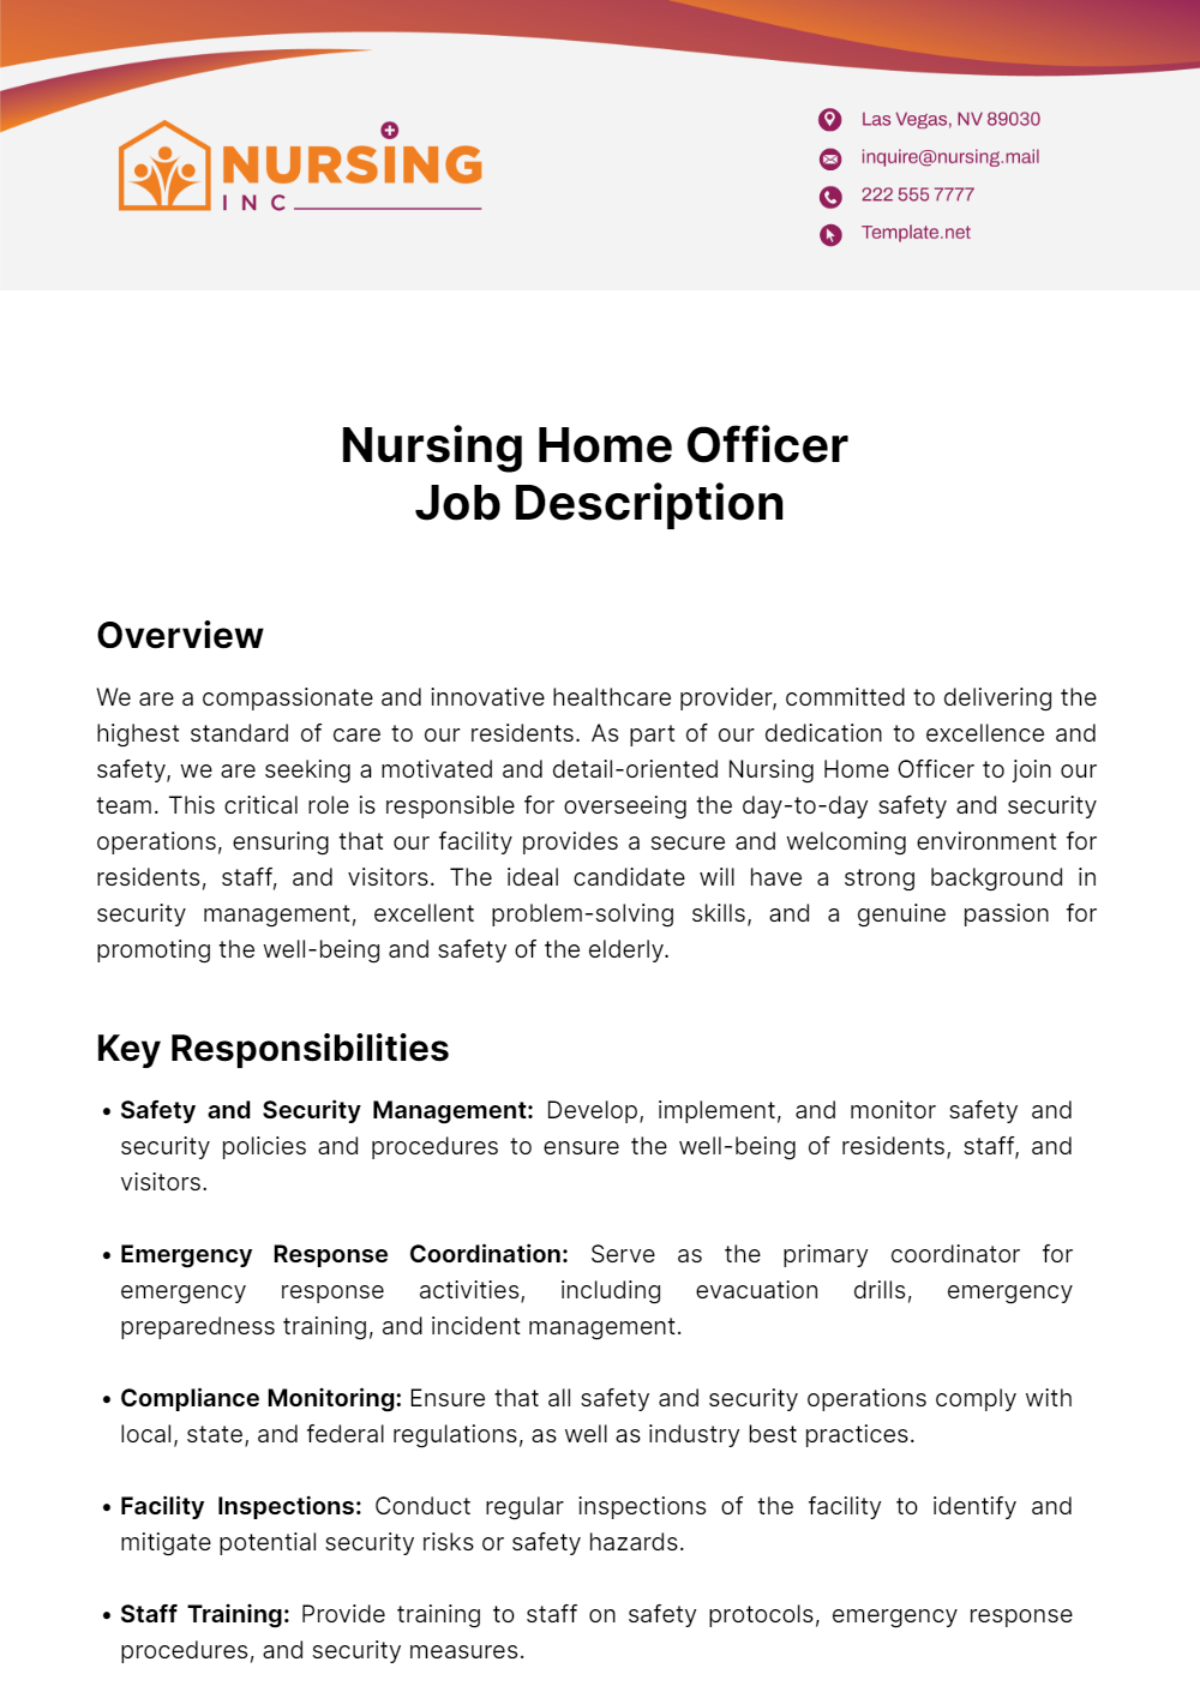 Nursing Home Officer Job Description Template